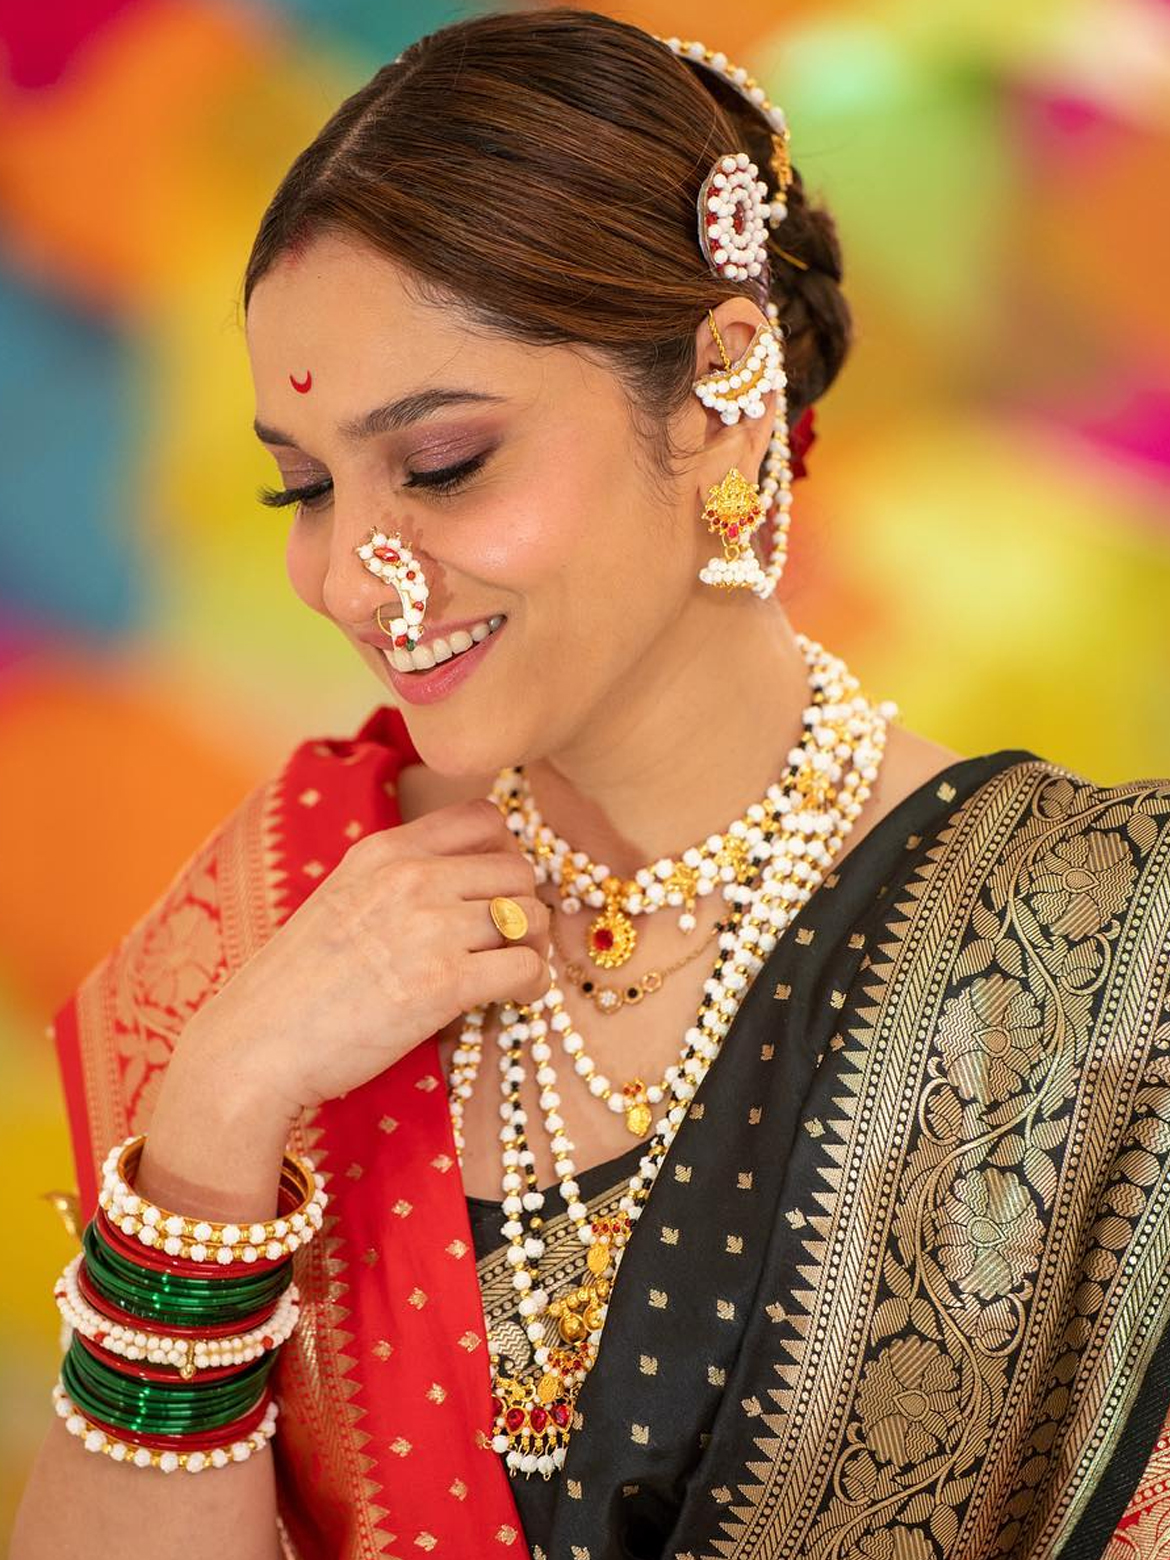 Maharashtrian Bridal Makeup Guide - SUGAR Cosmetics